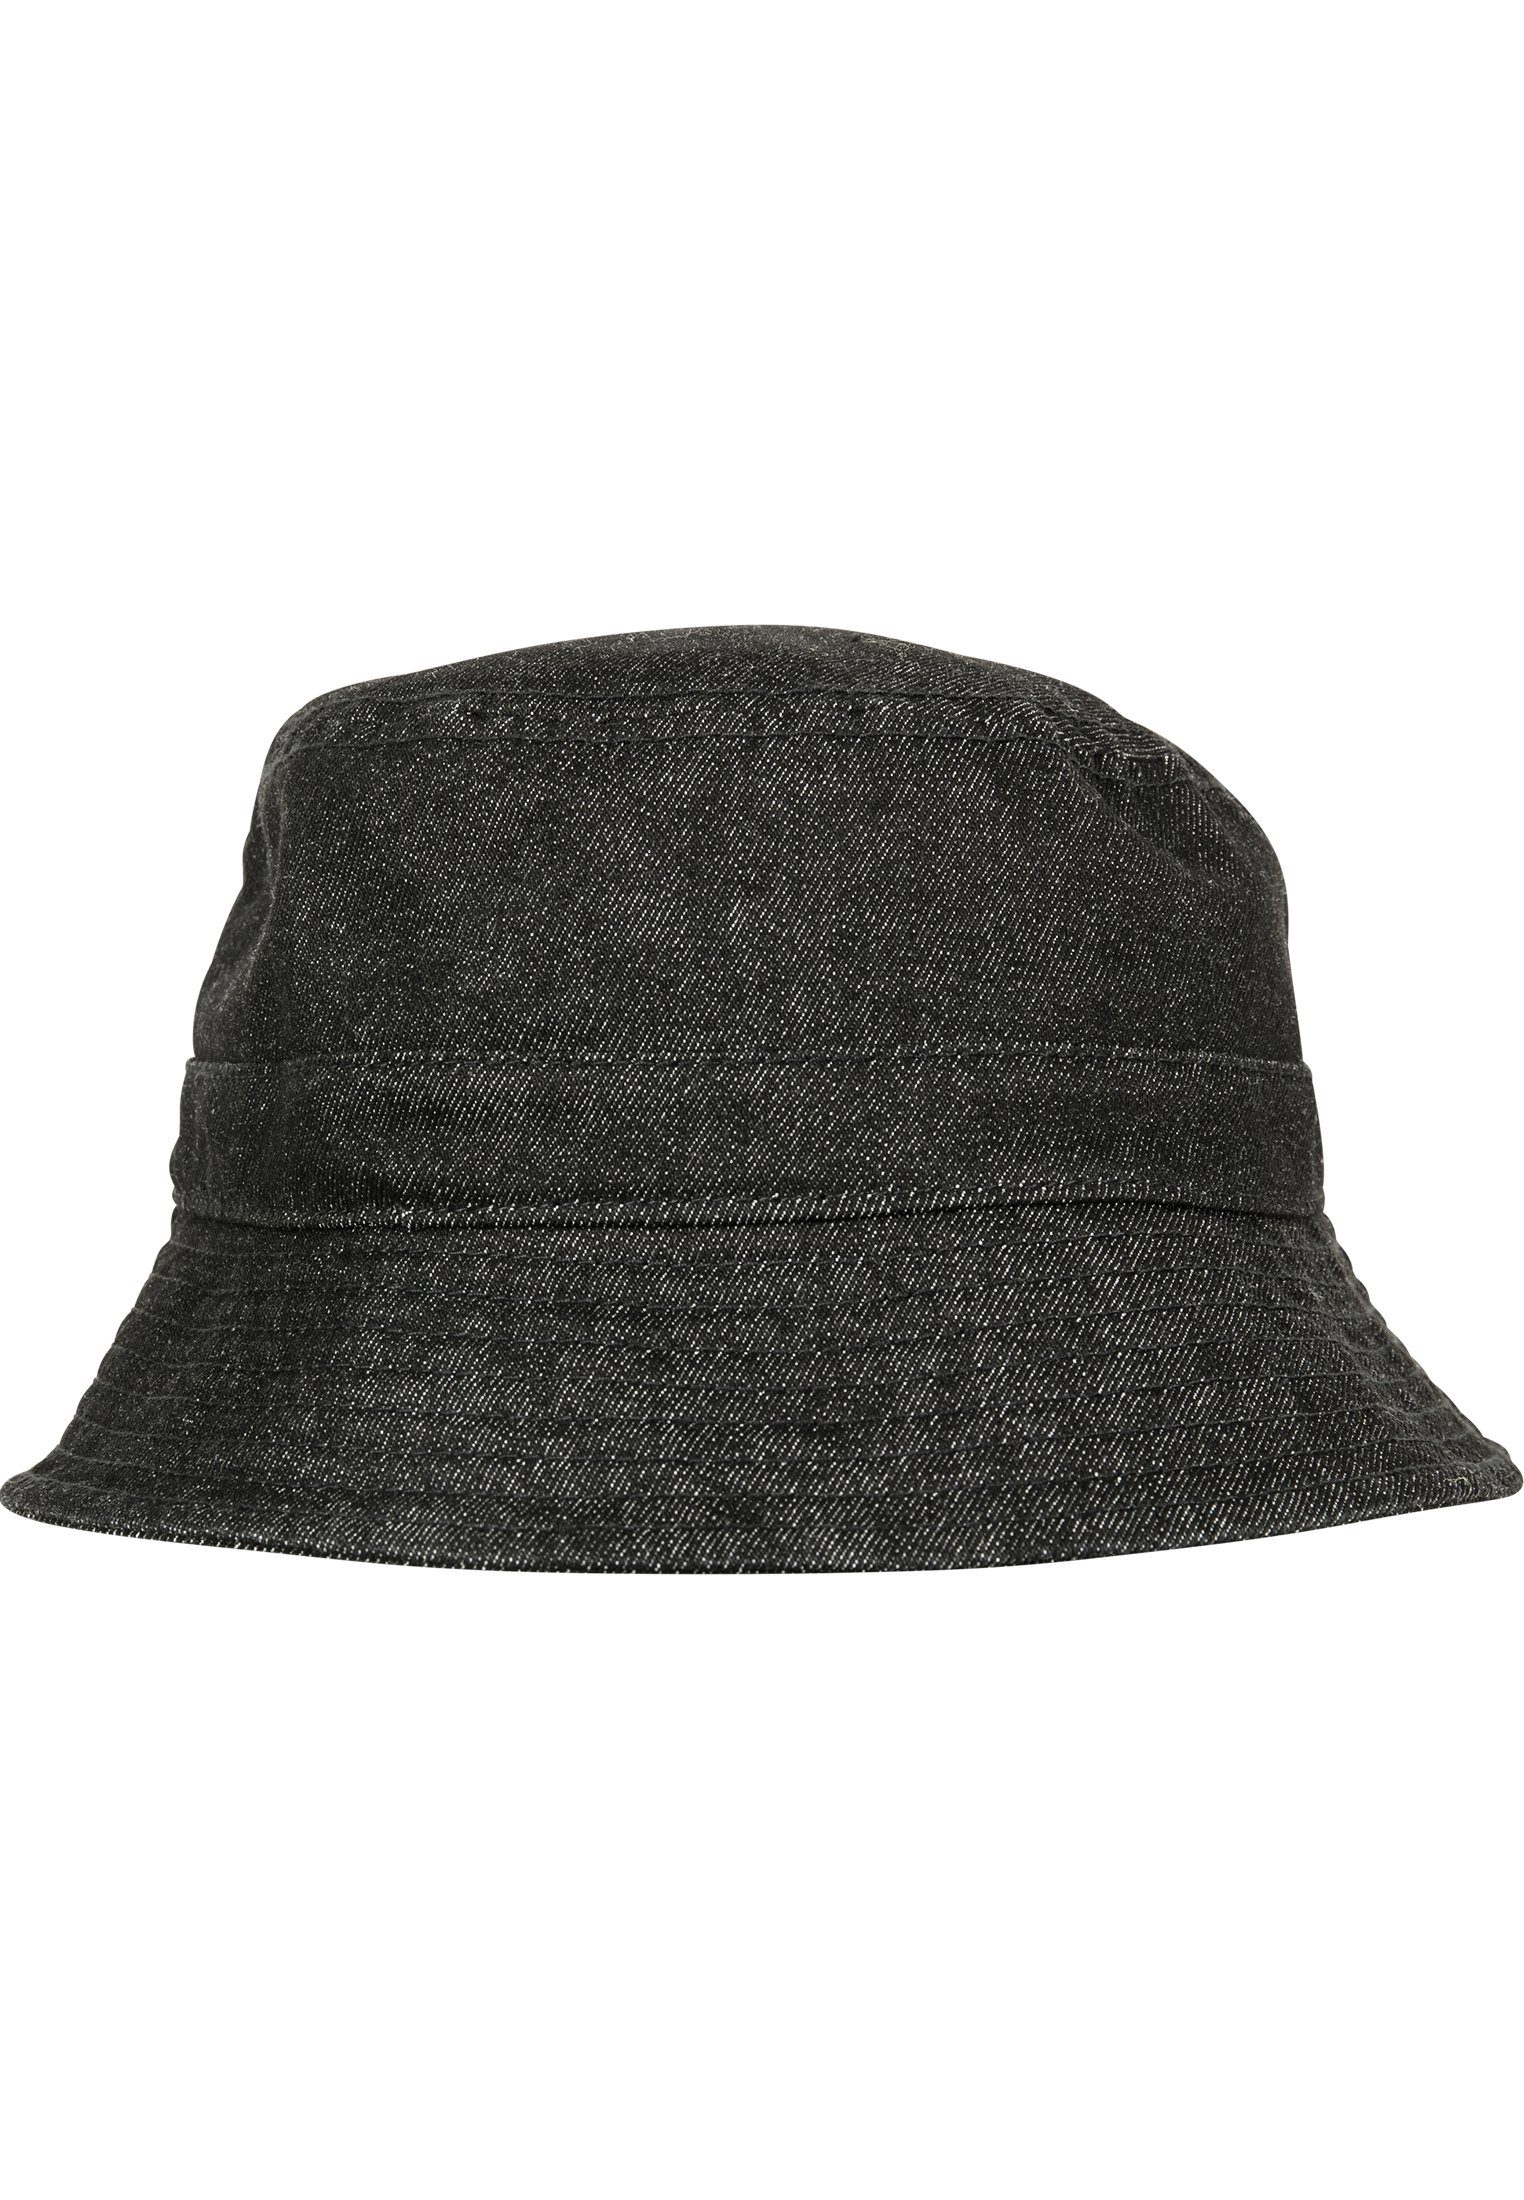 Hat black/grey Flexfit Hat Bucket Cap Bucket Flex Denim